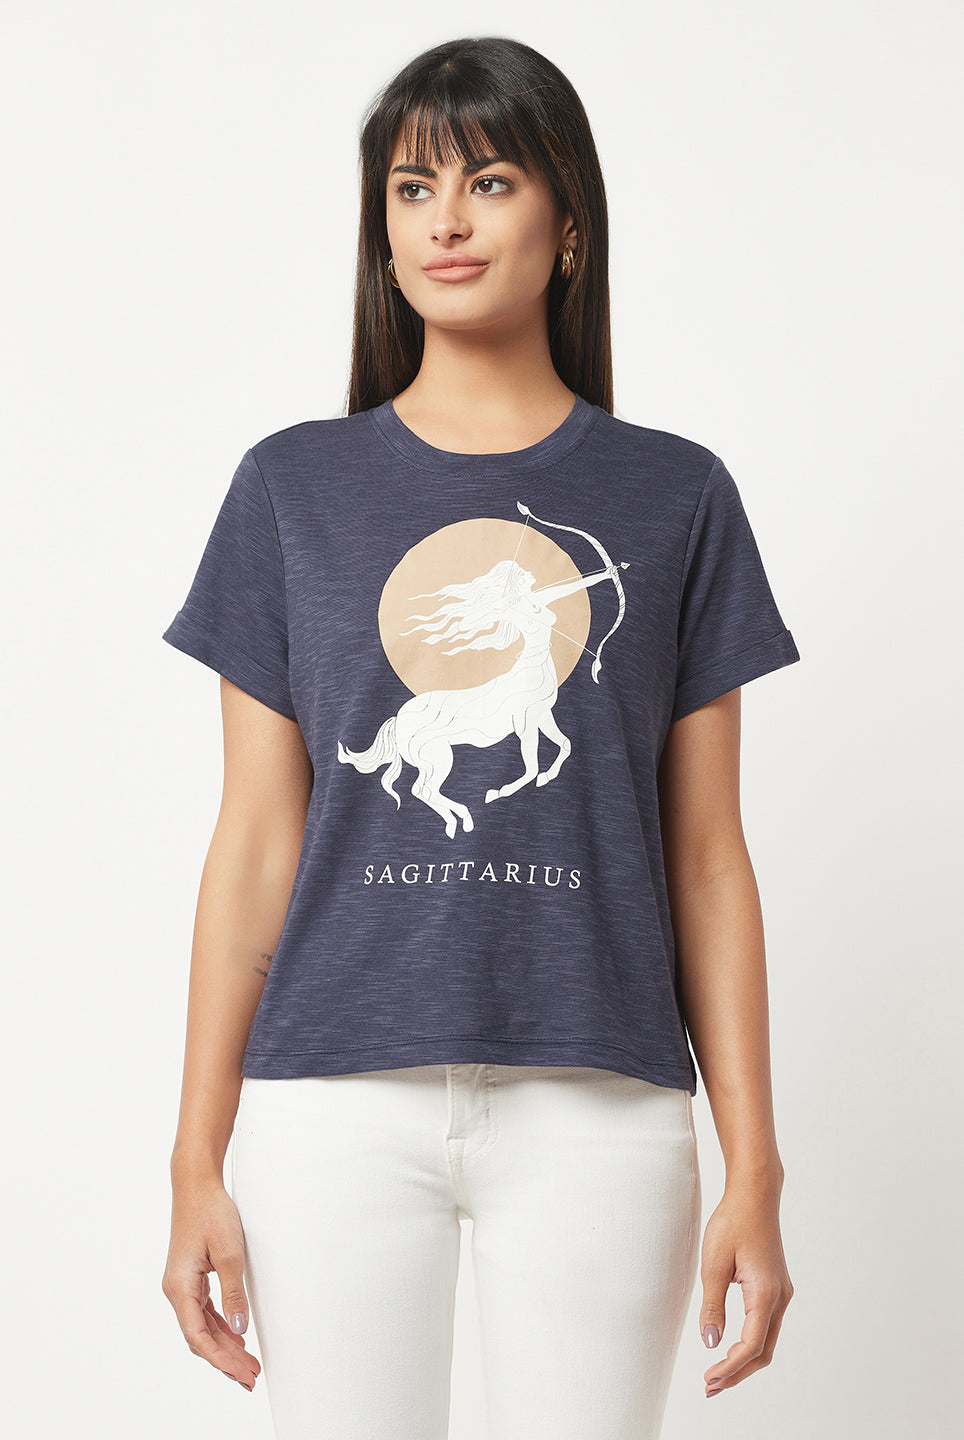 Sagittarius zodiac sign t-shirt